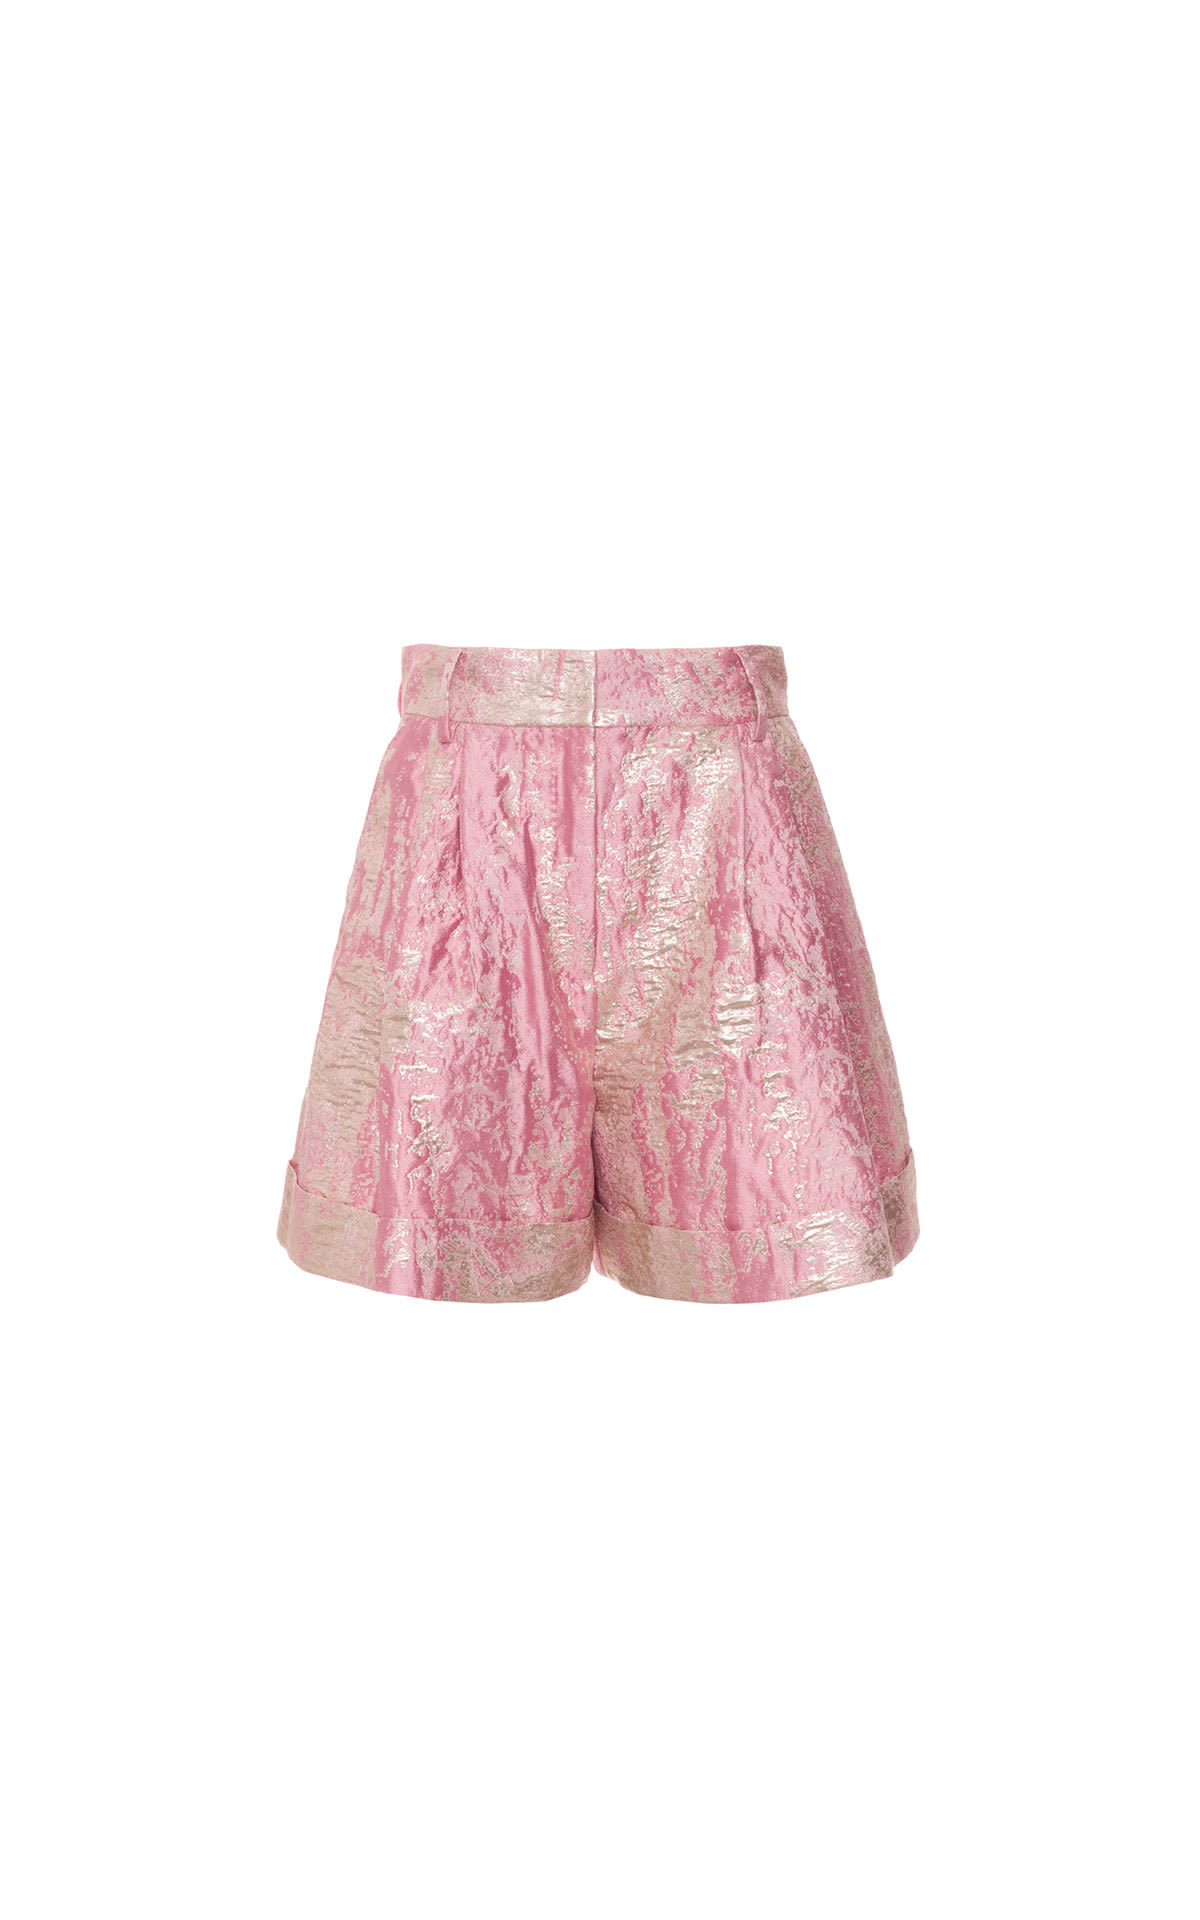 Dolce & Gabbana Shimmer jacquard shorts from Bicester Village